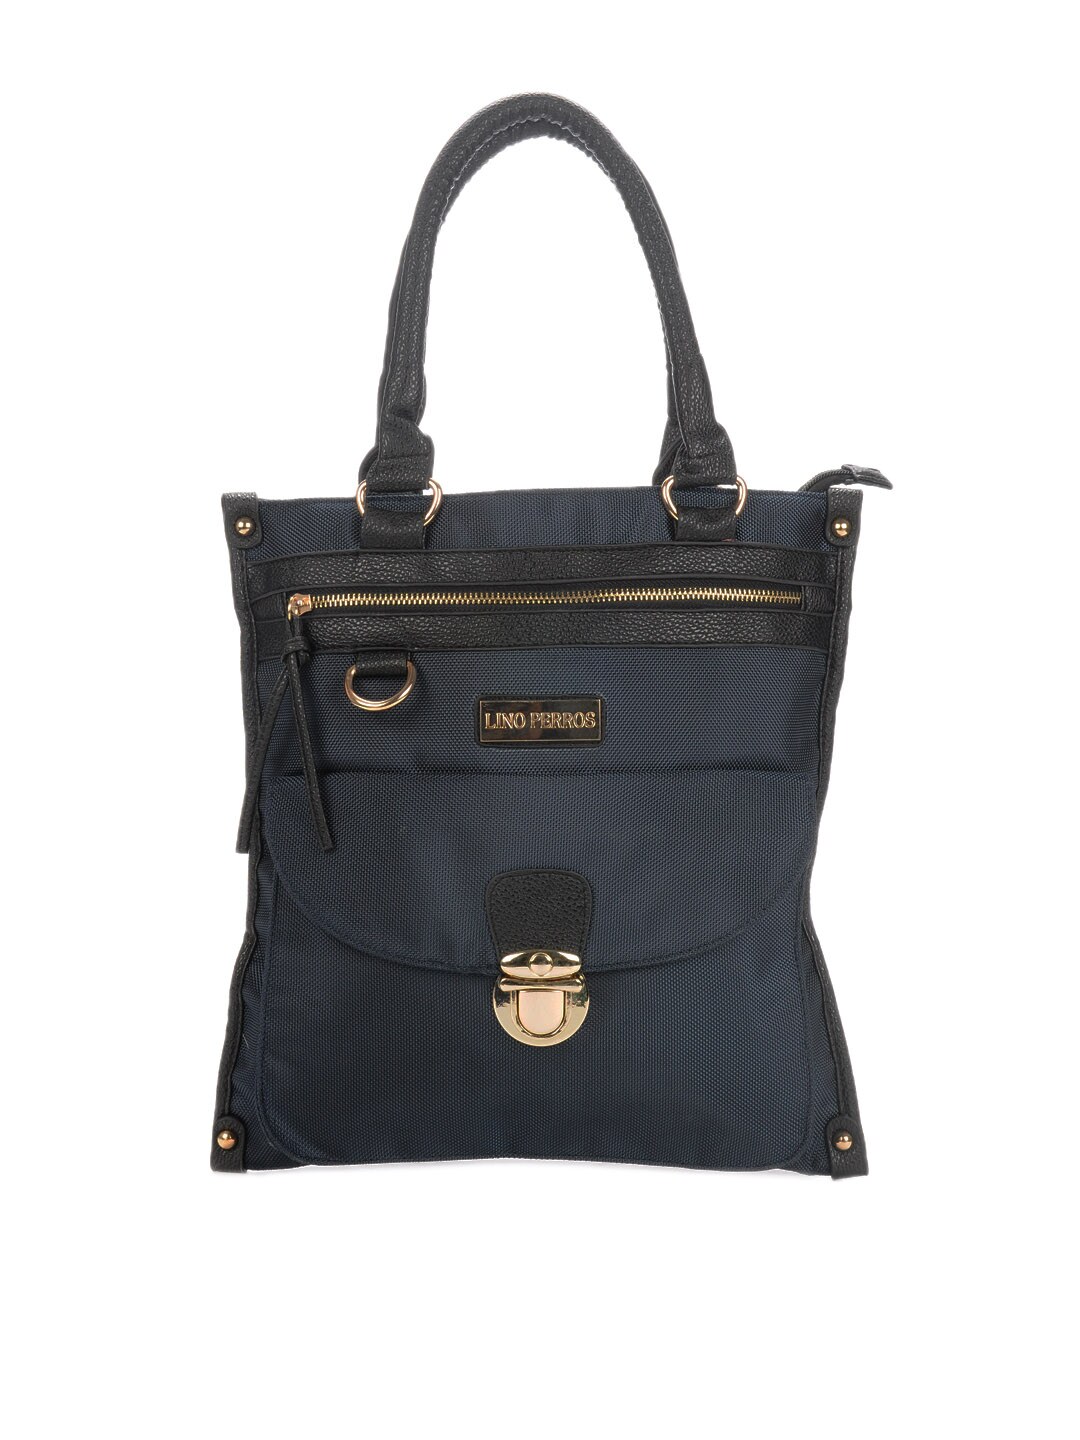 Lino Perros Women Blue Handbag